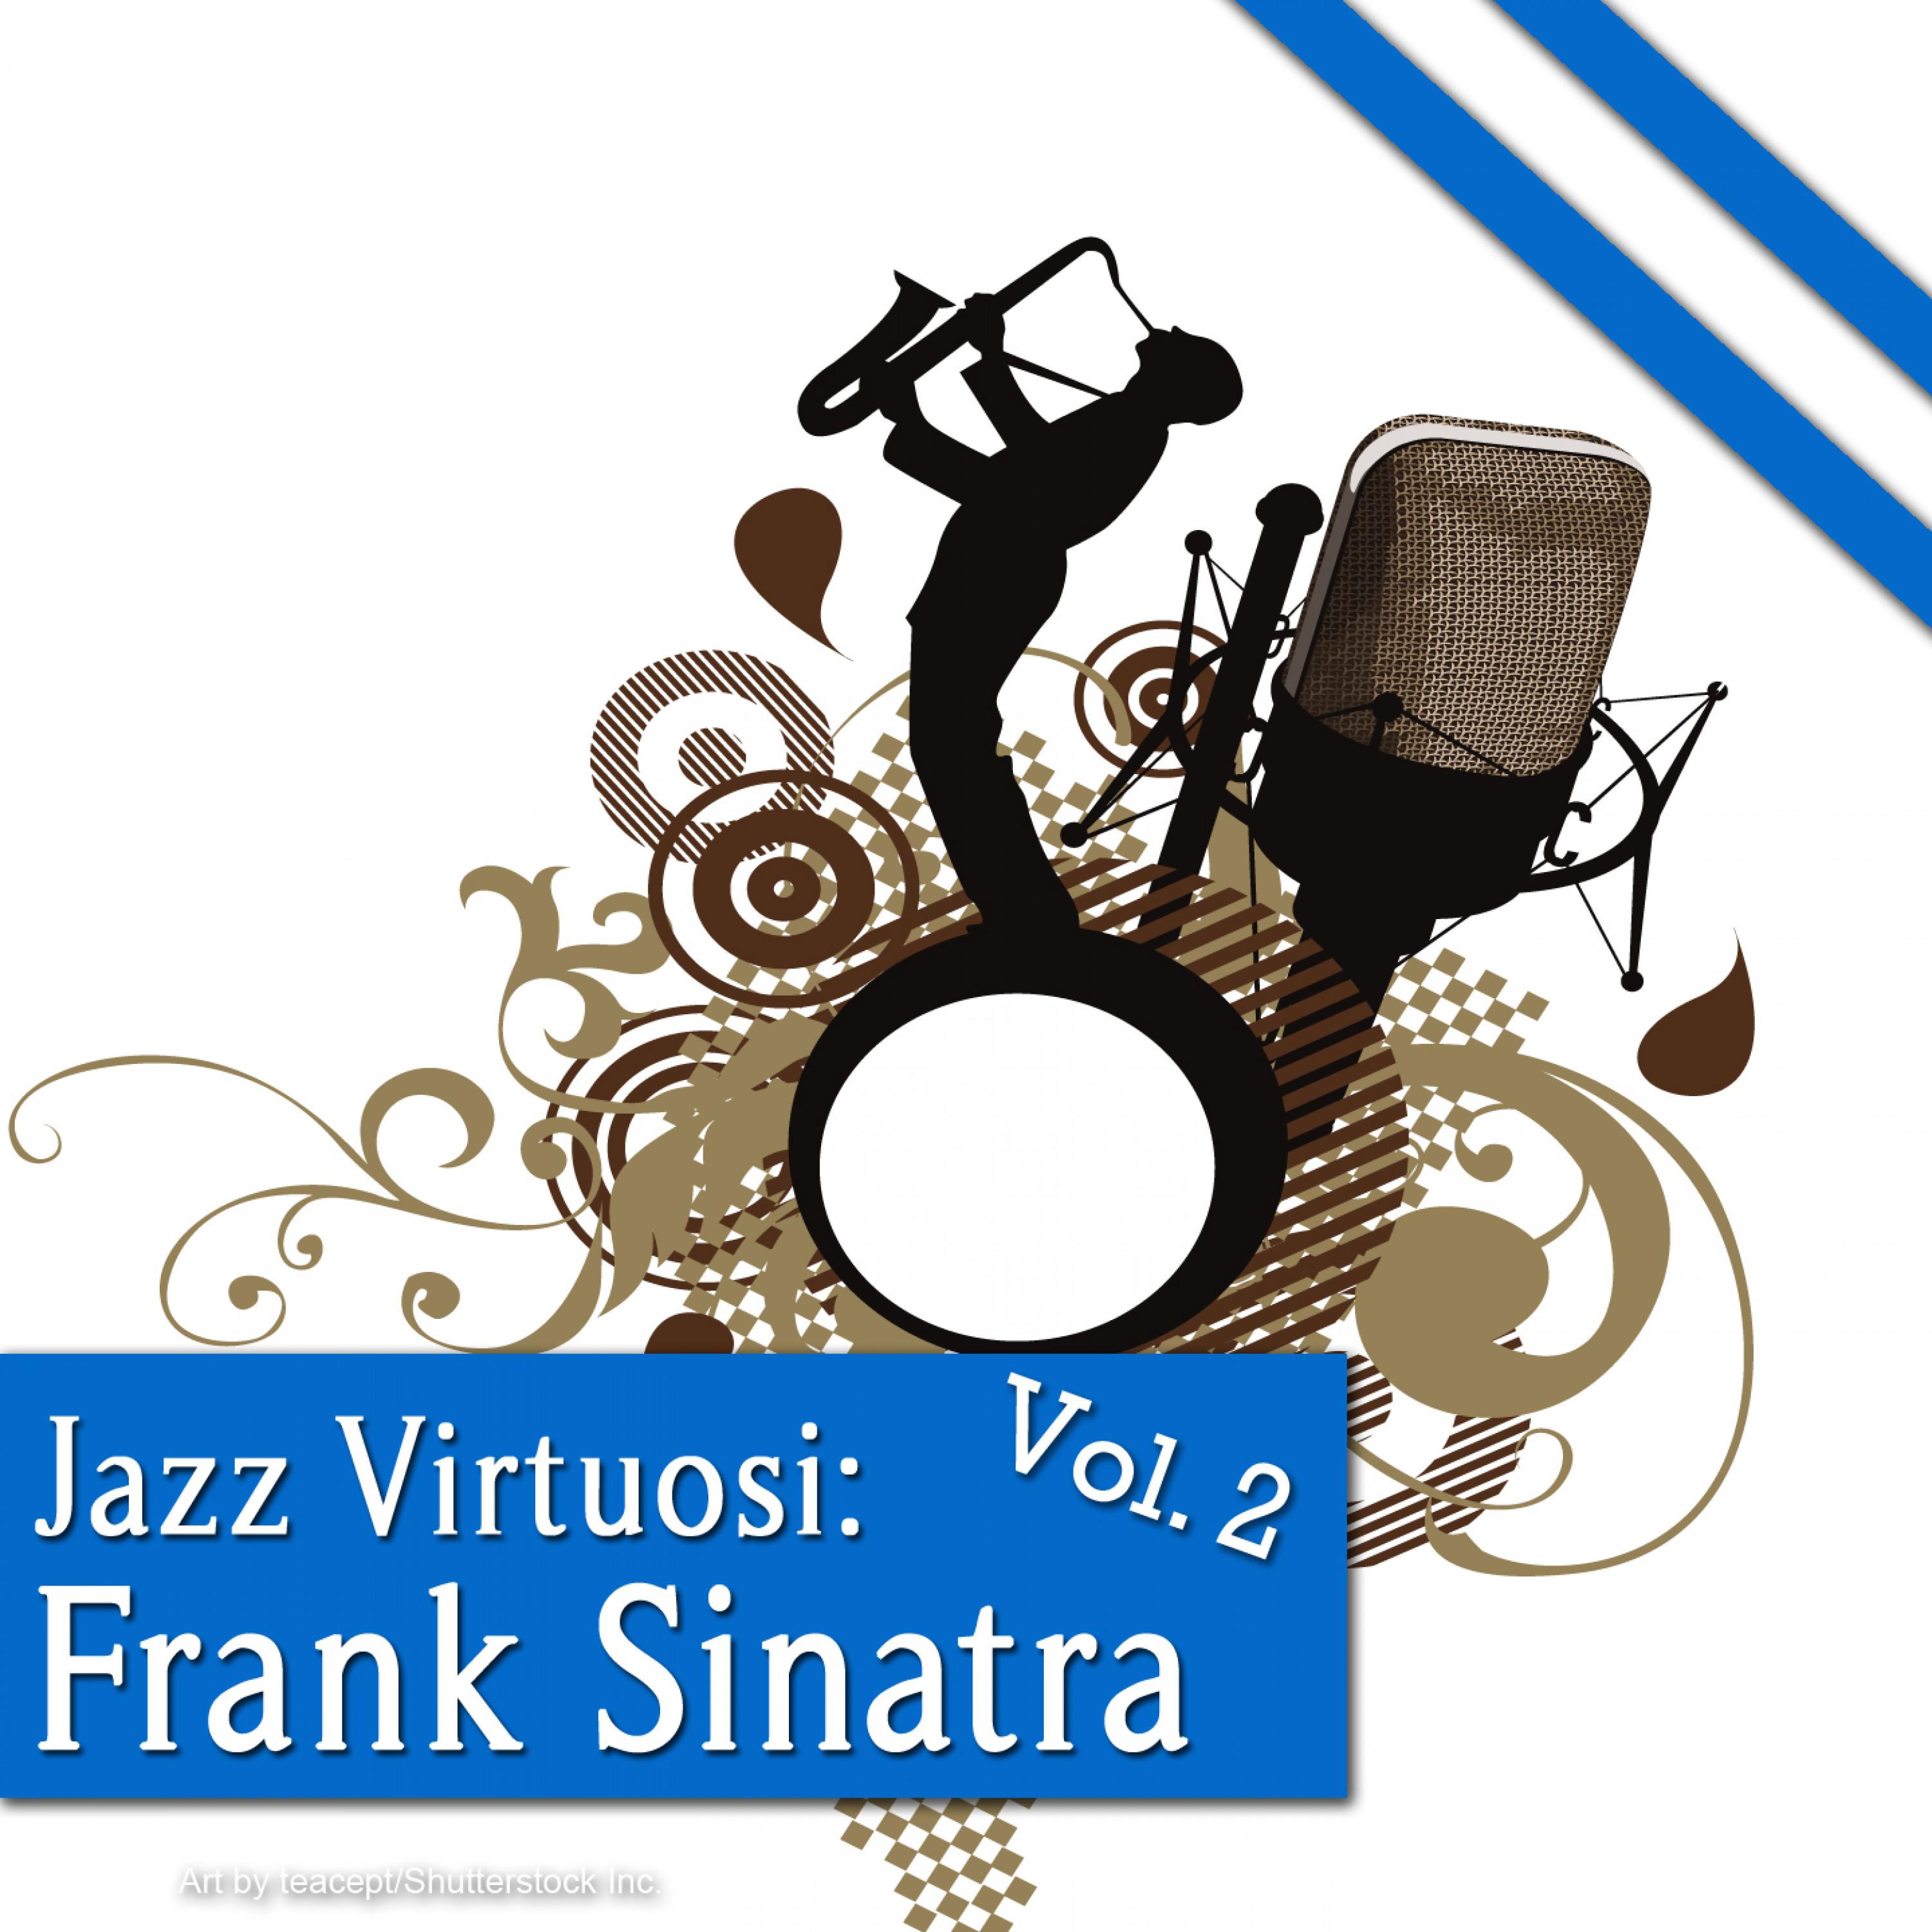 Jazz Virtuosi: Frank Sinatra Vol. 2